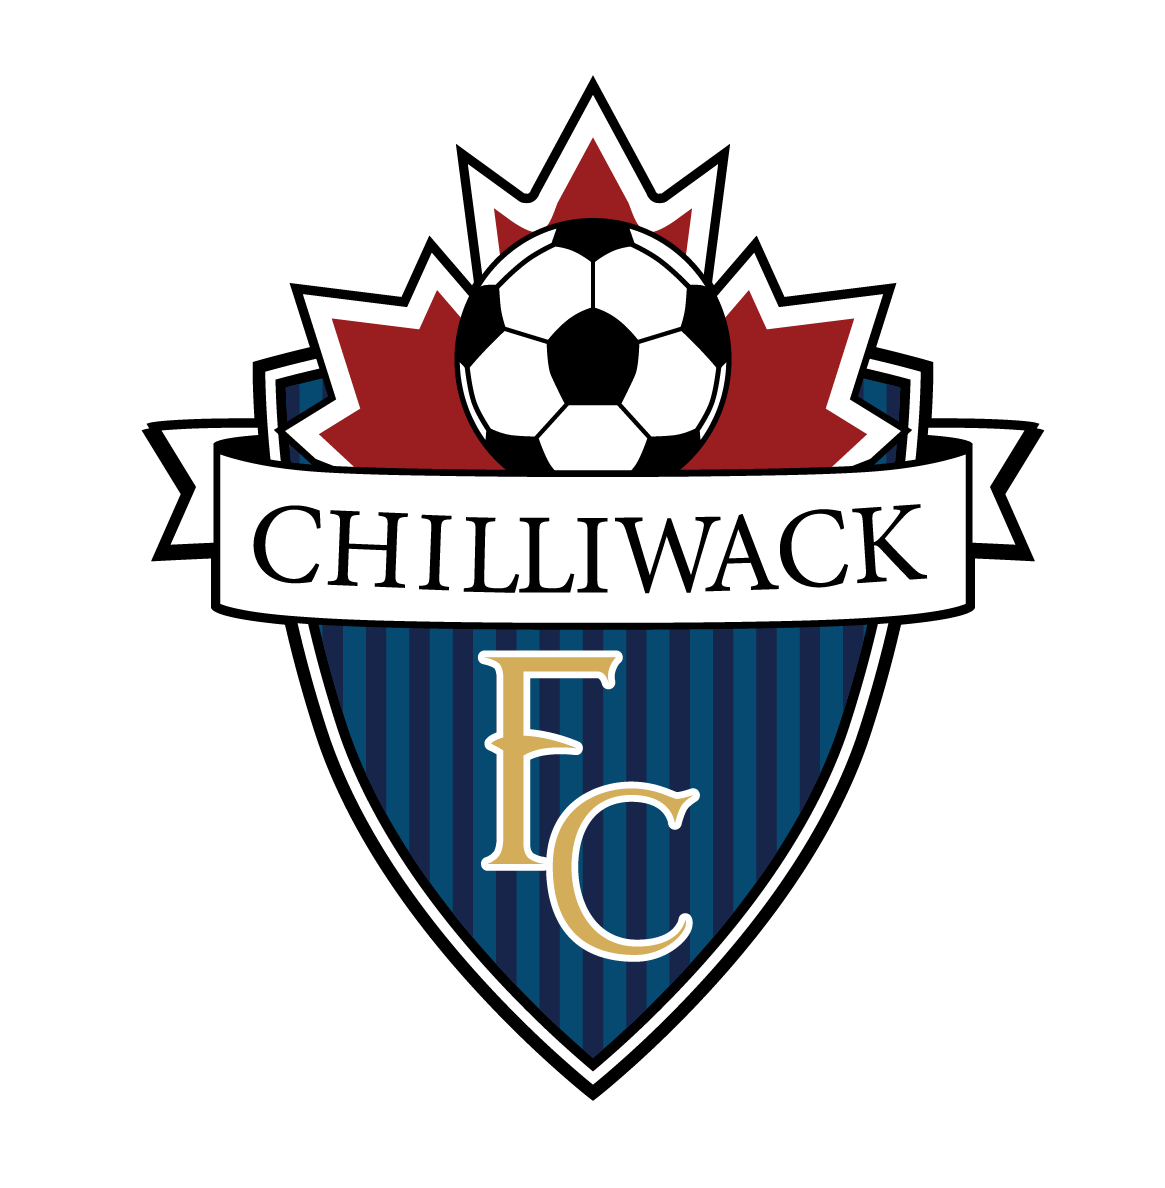 Chilliwack Football Club